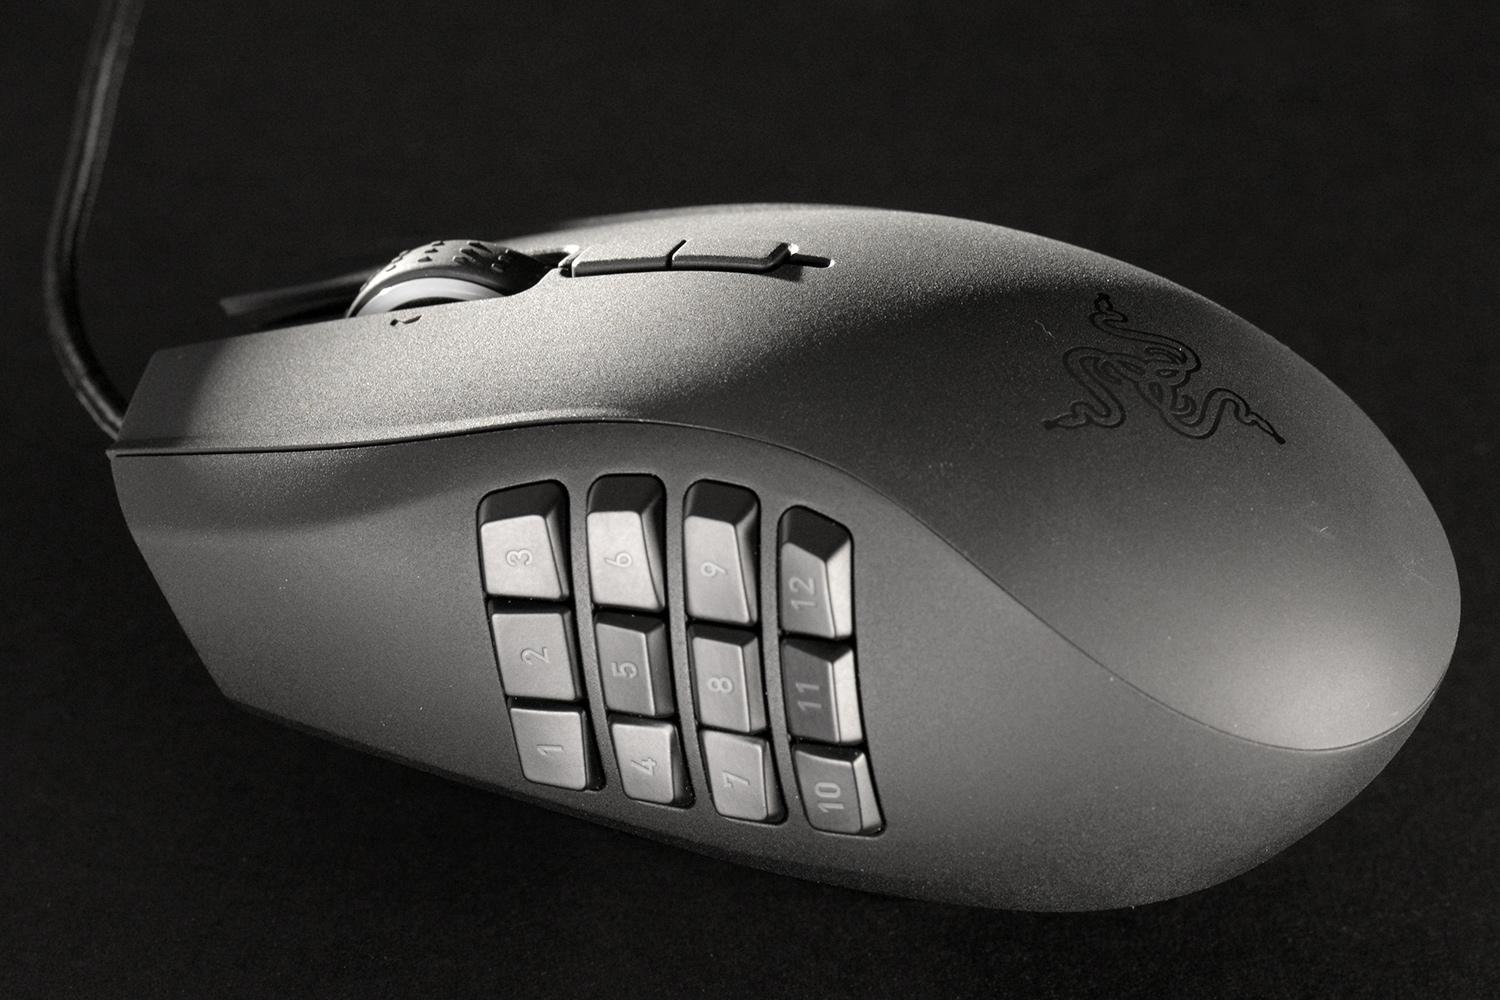 Razer Naga Pro Gaming Mouse Review